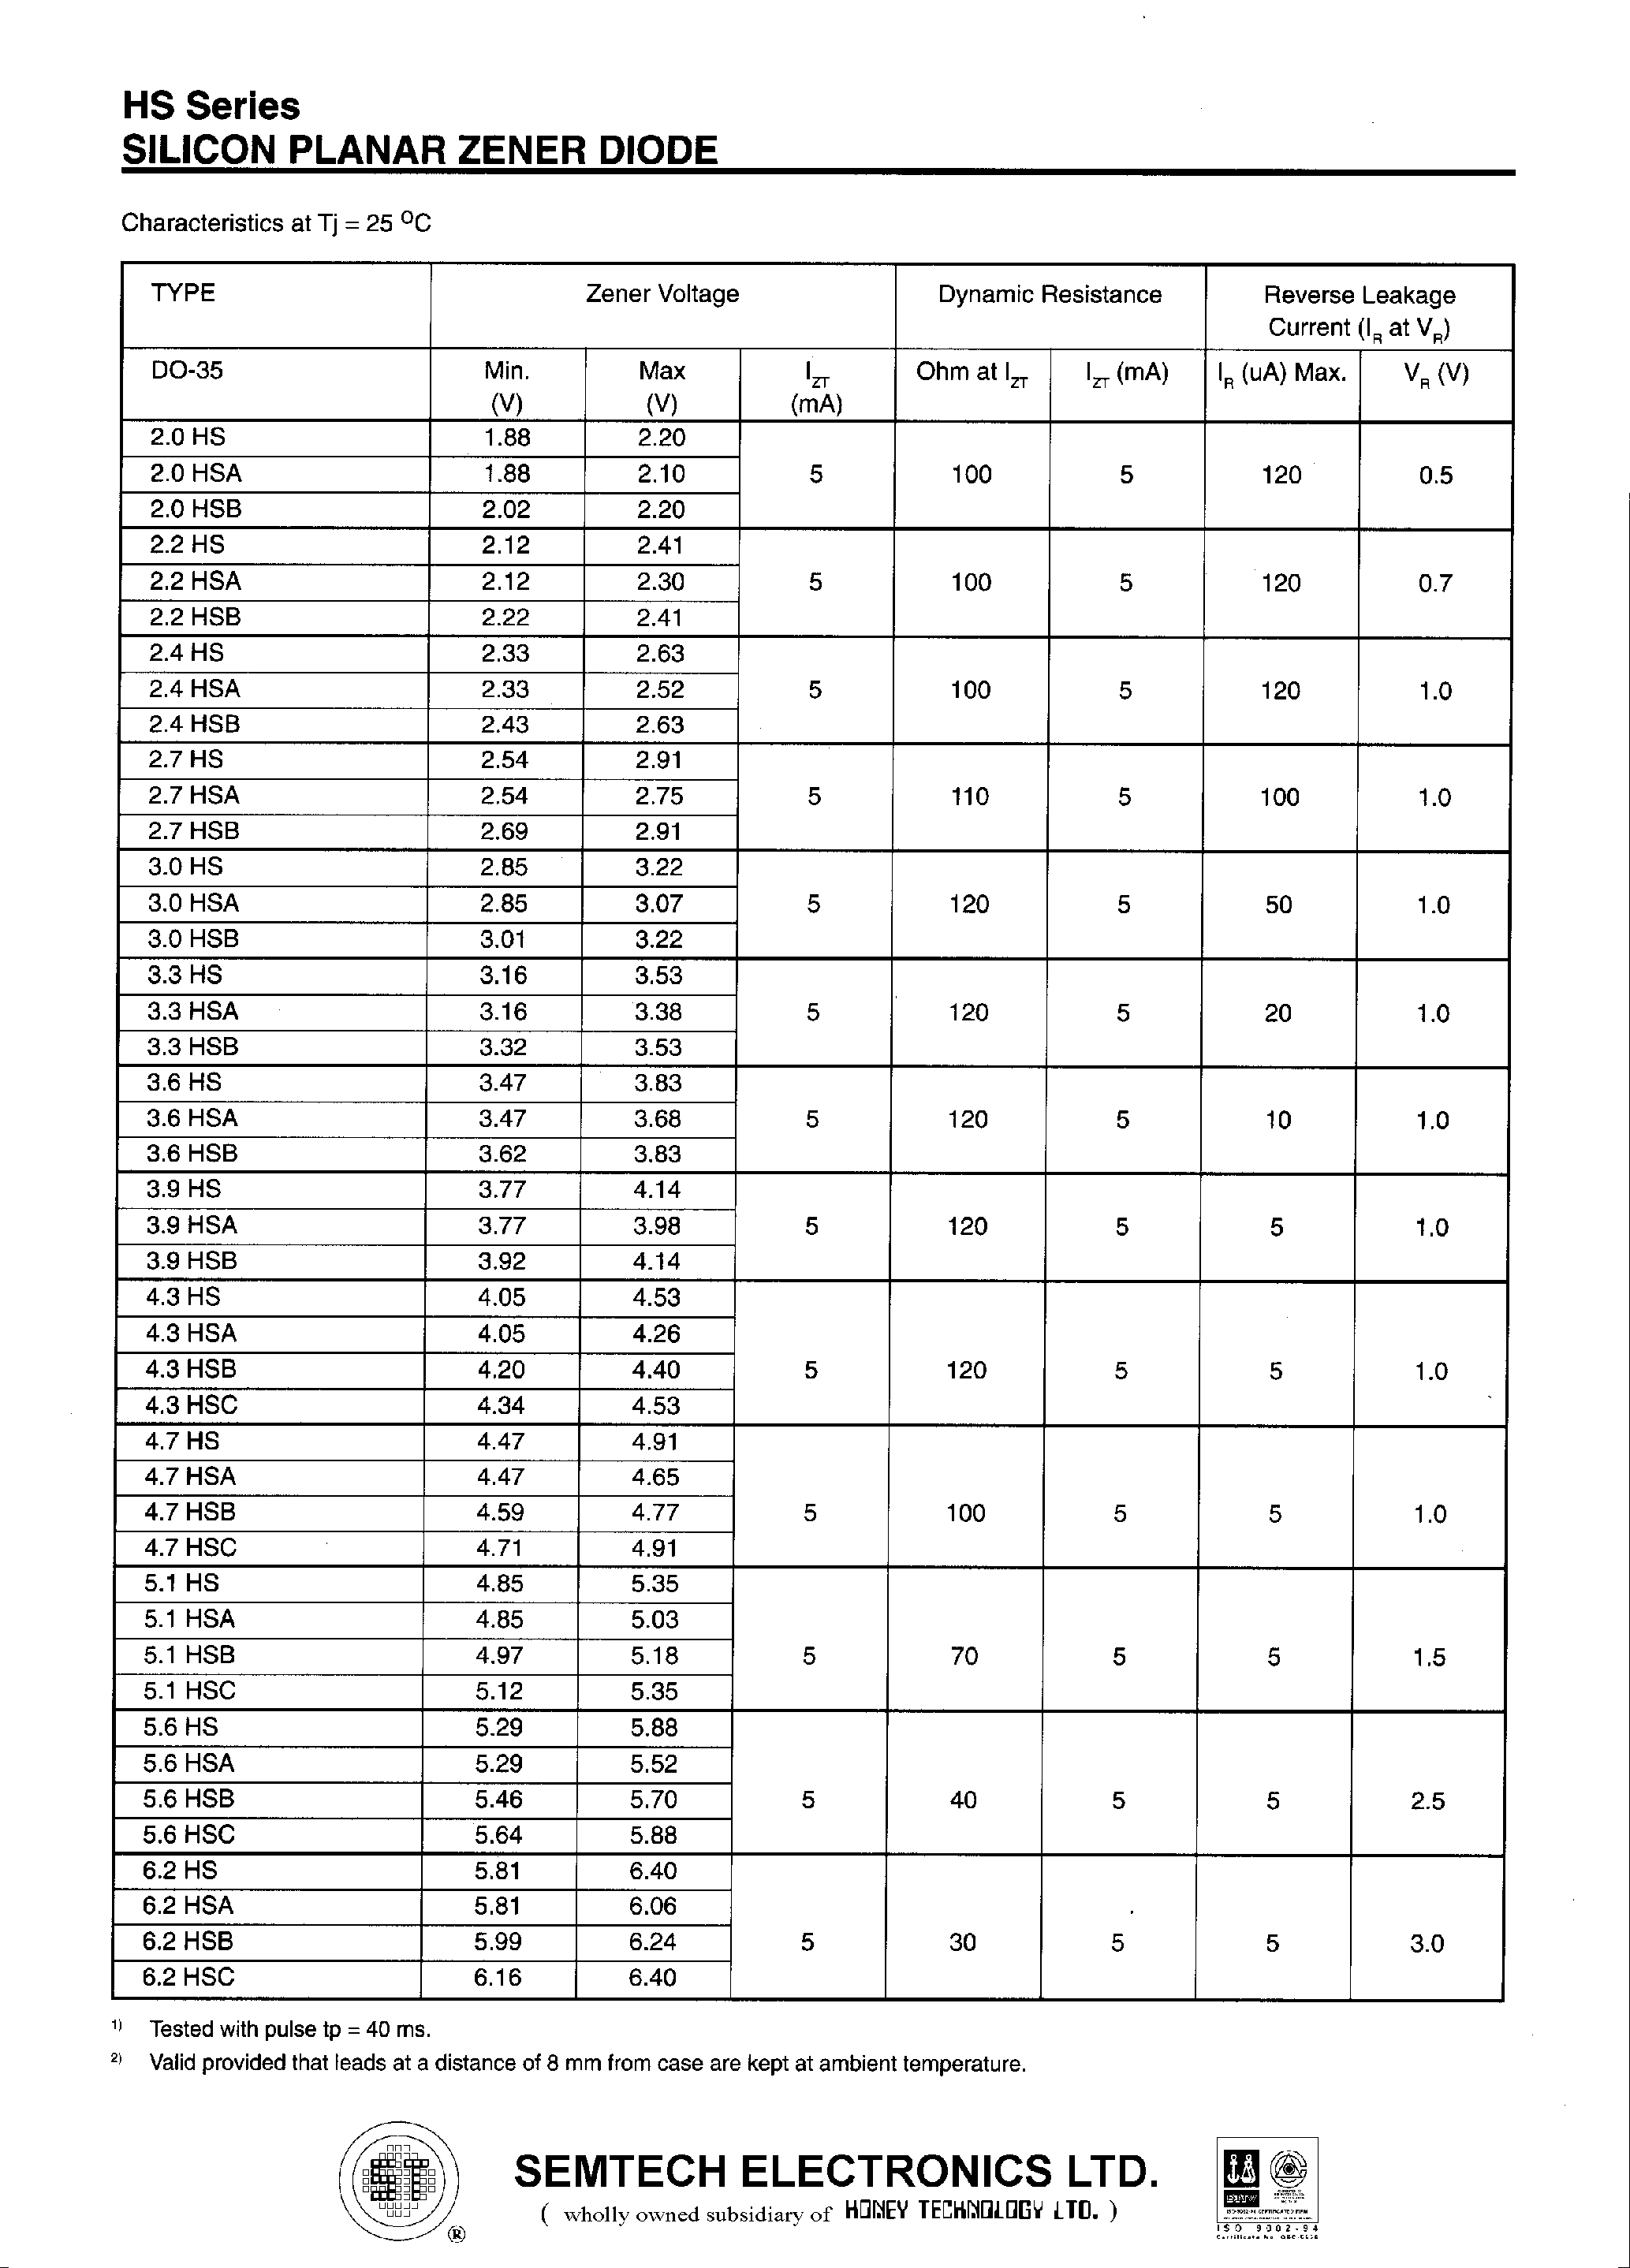 Datasheet 5.1HSB - SILICON PLANAR ZENER DIODE page 2